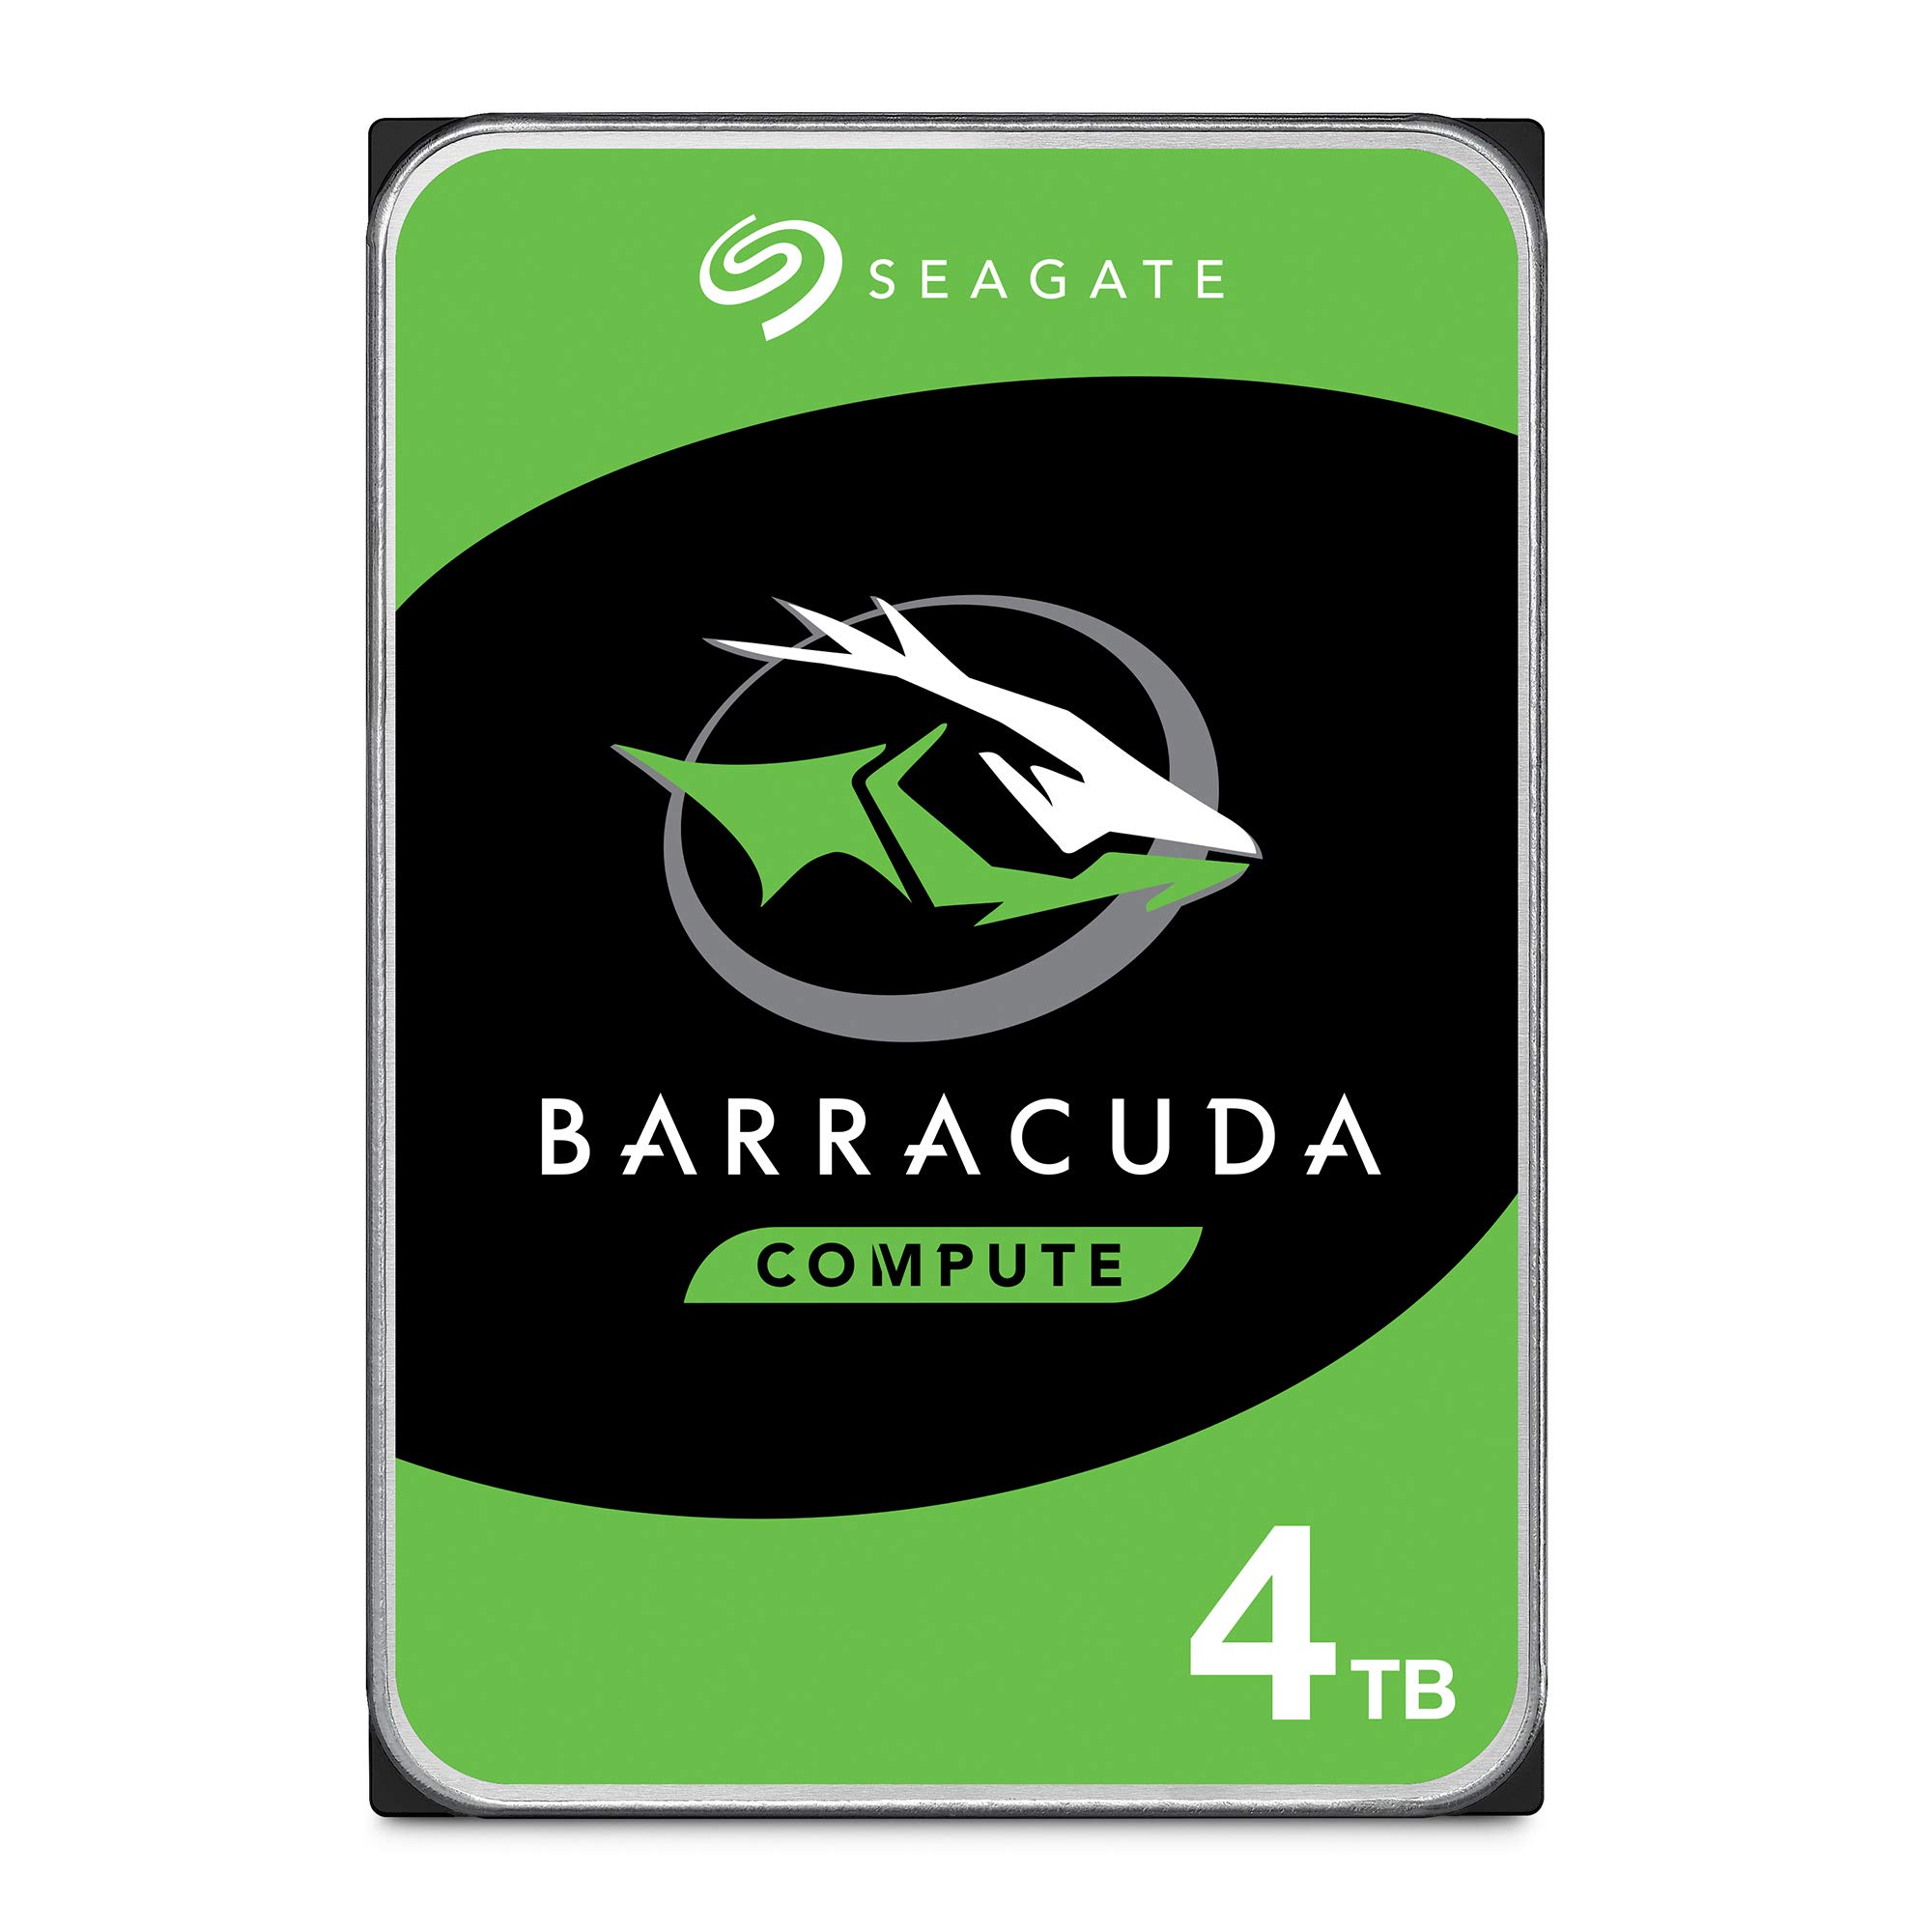 Seagate BarraCuda 4TB Internal Hard Drive HDD 3.5 Inch Sata 6 Gbs 5400 RPM 256MB Cache for Computer Desktop PC Laptop S